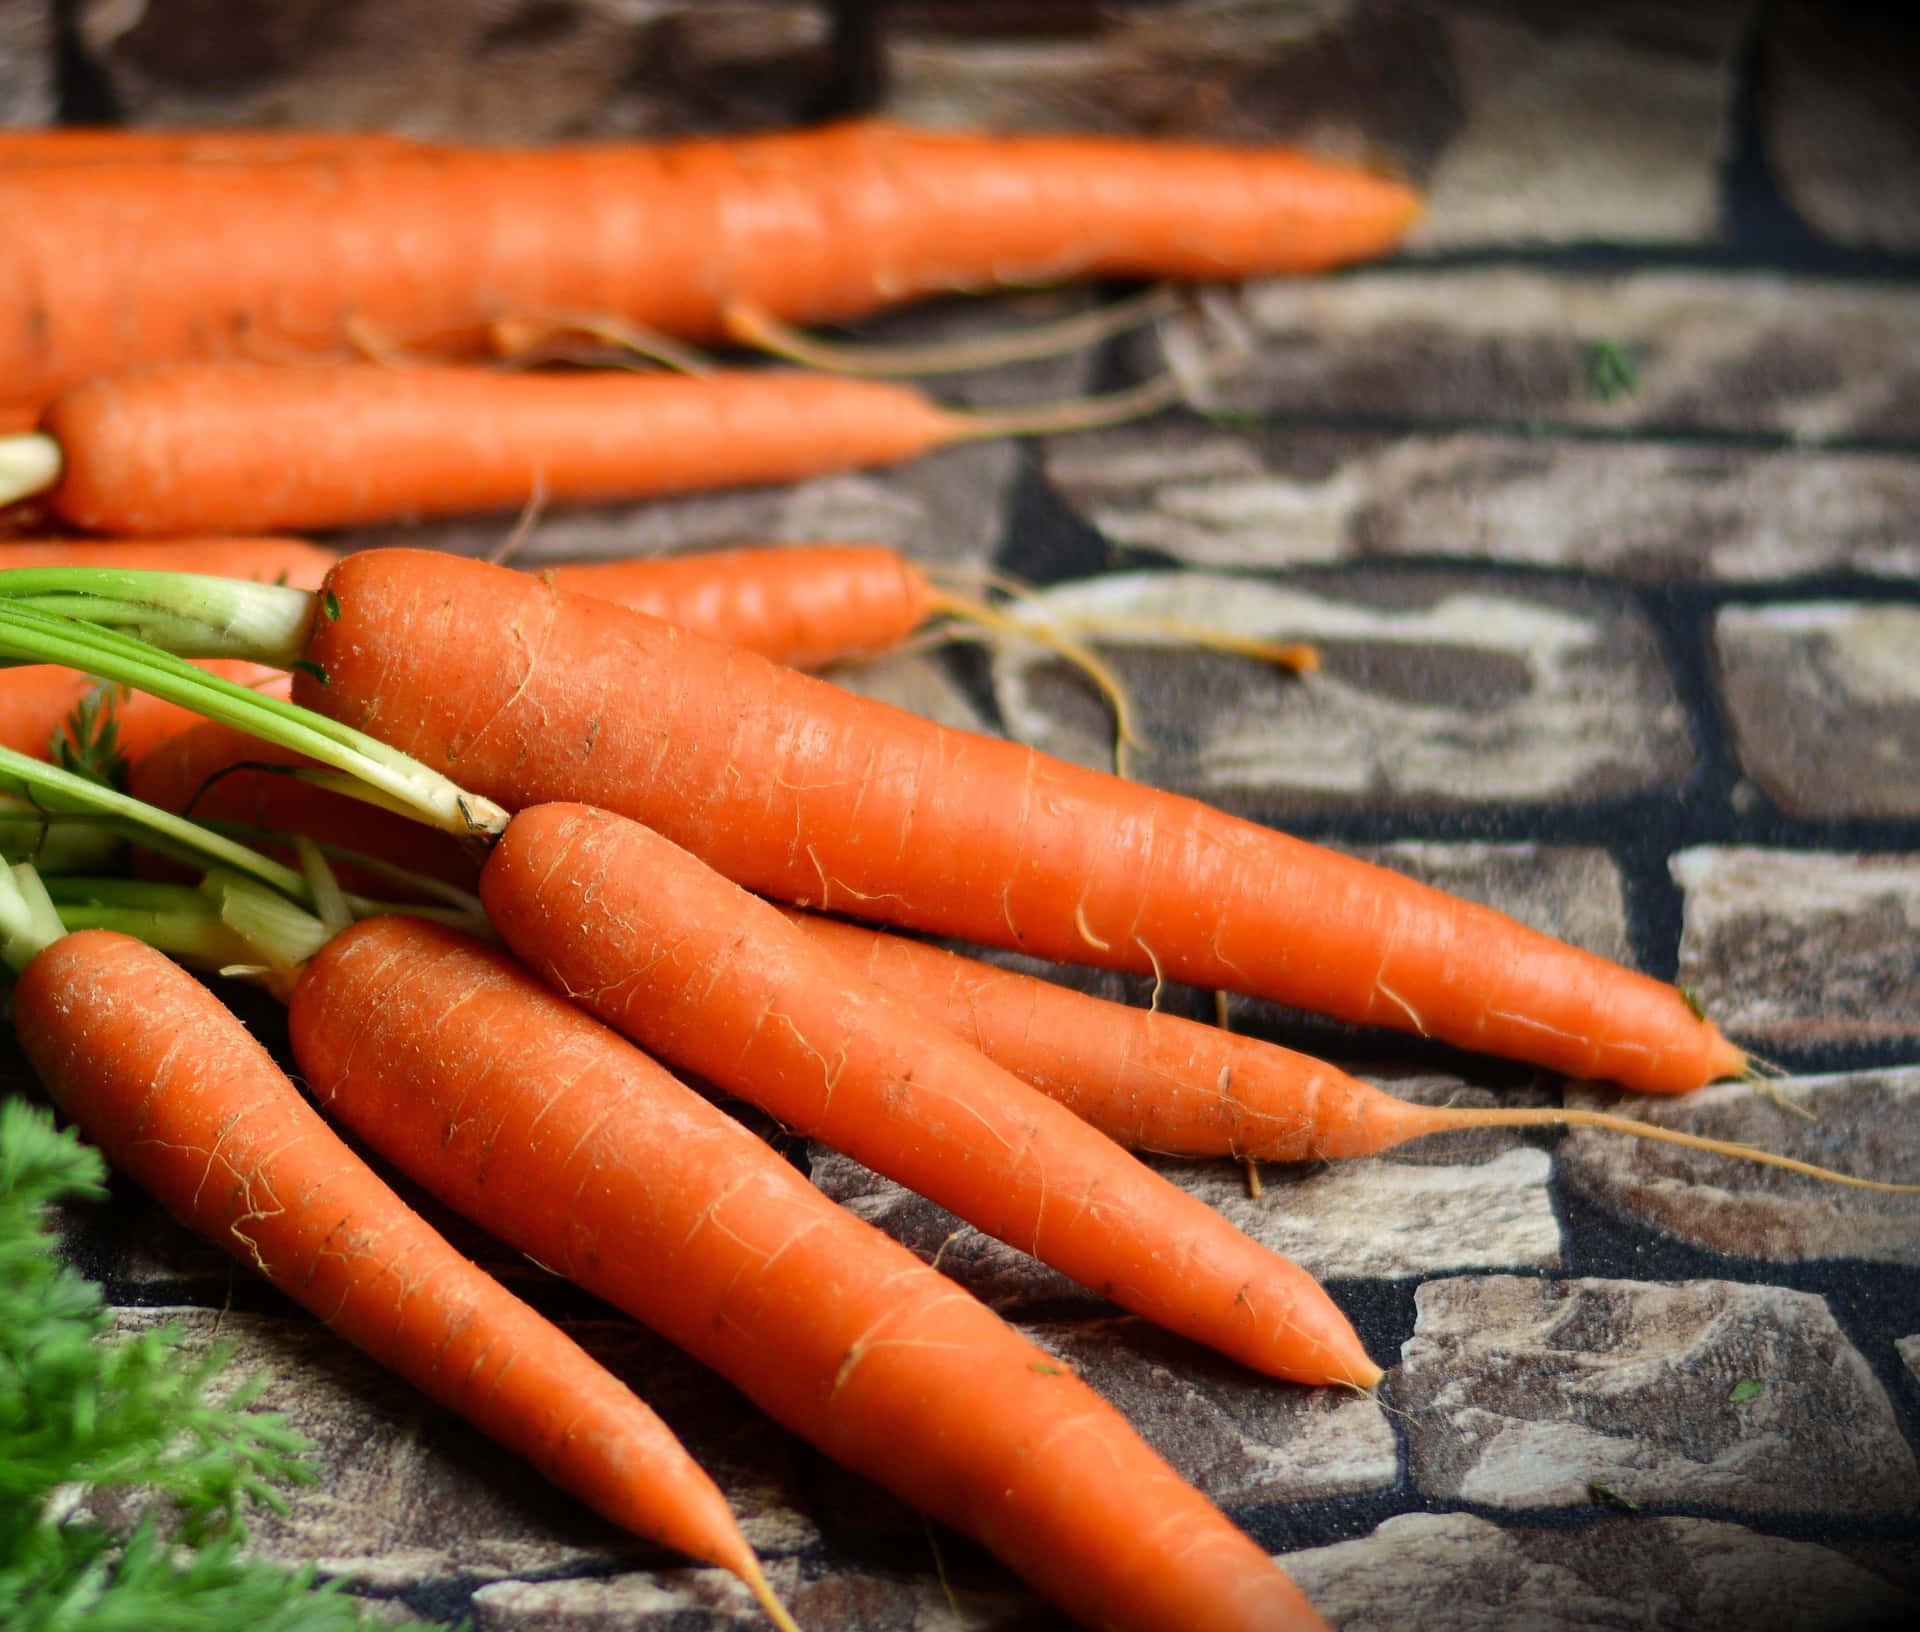 Enjoy a Delicious and Nutritious Carrot Today